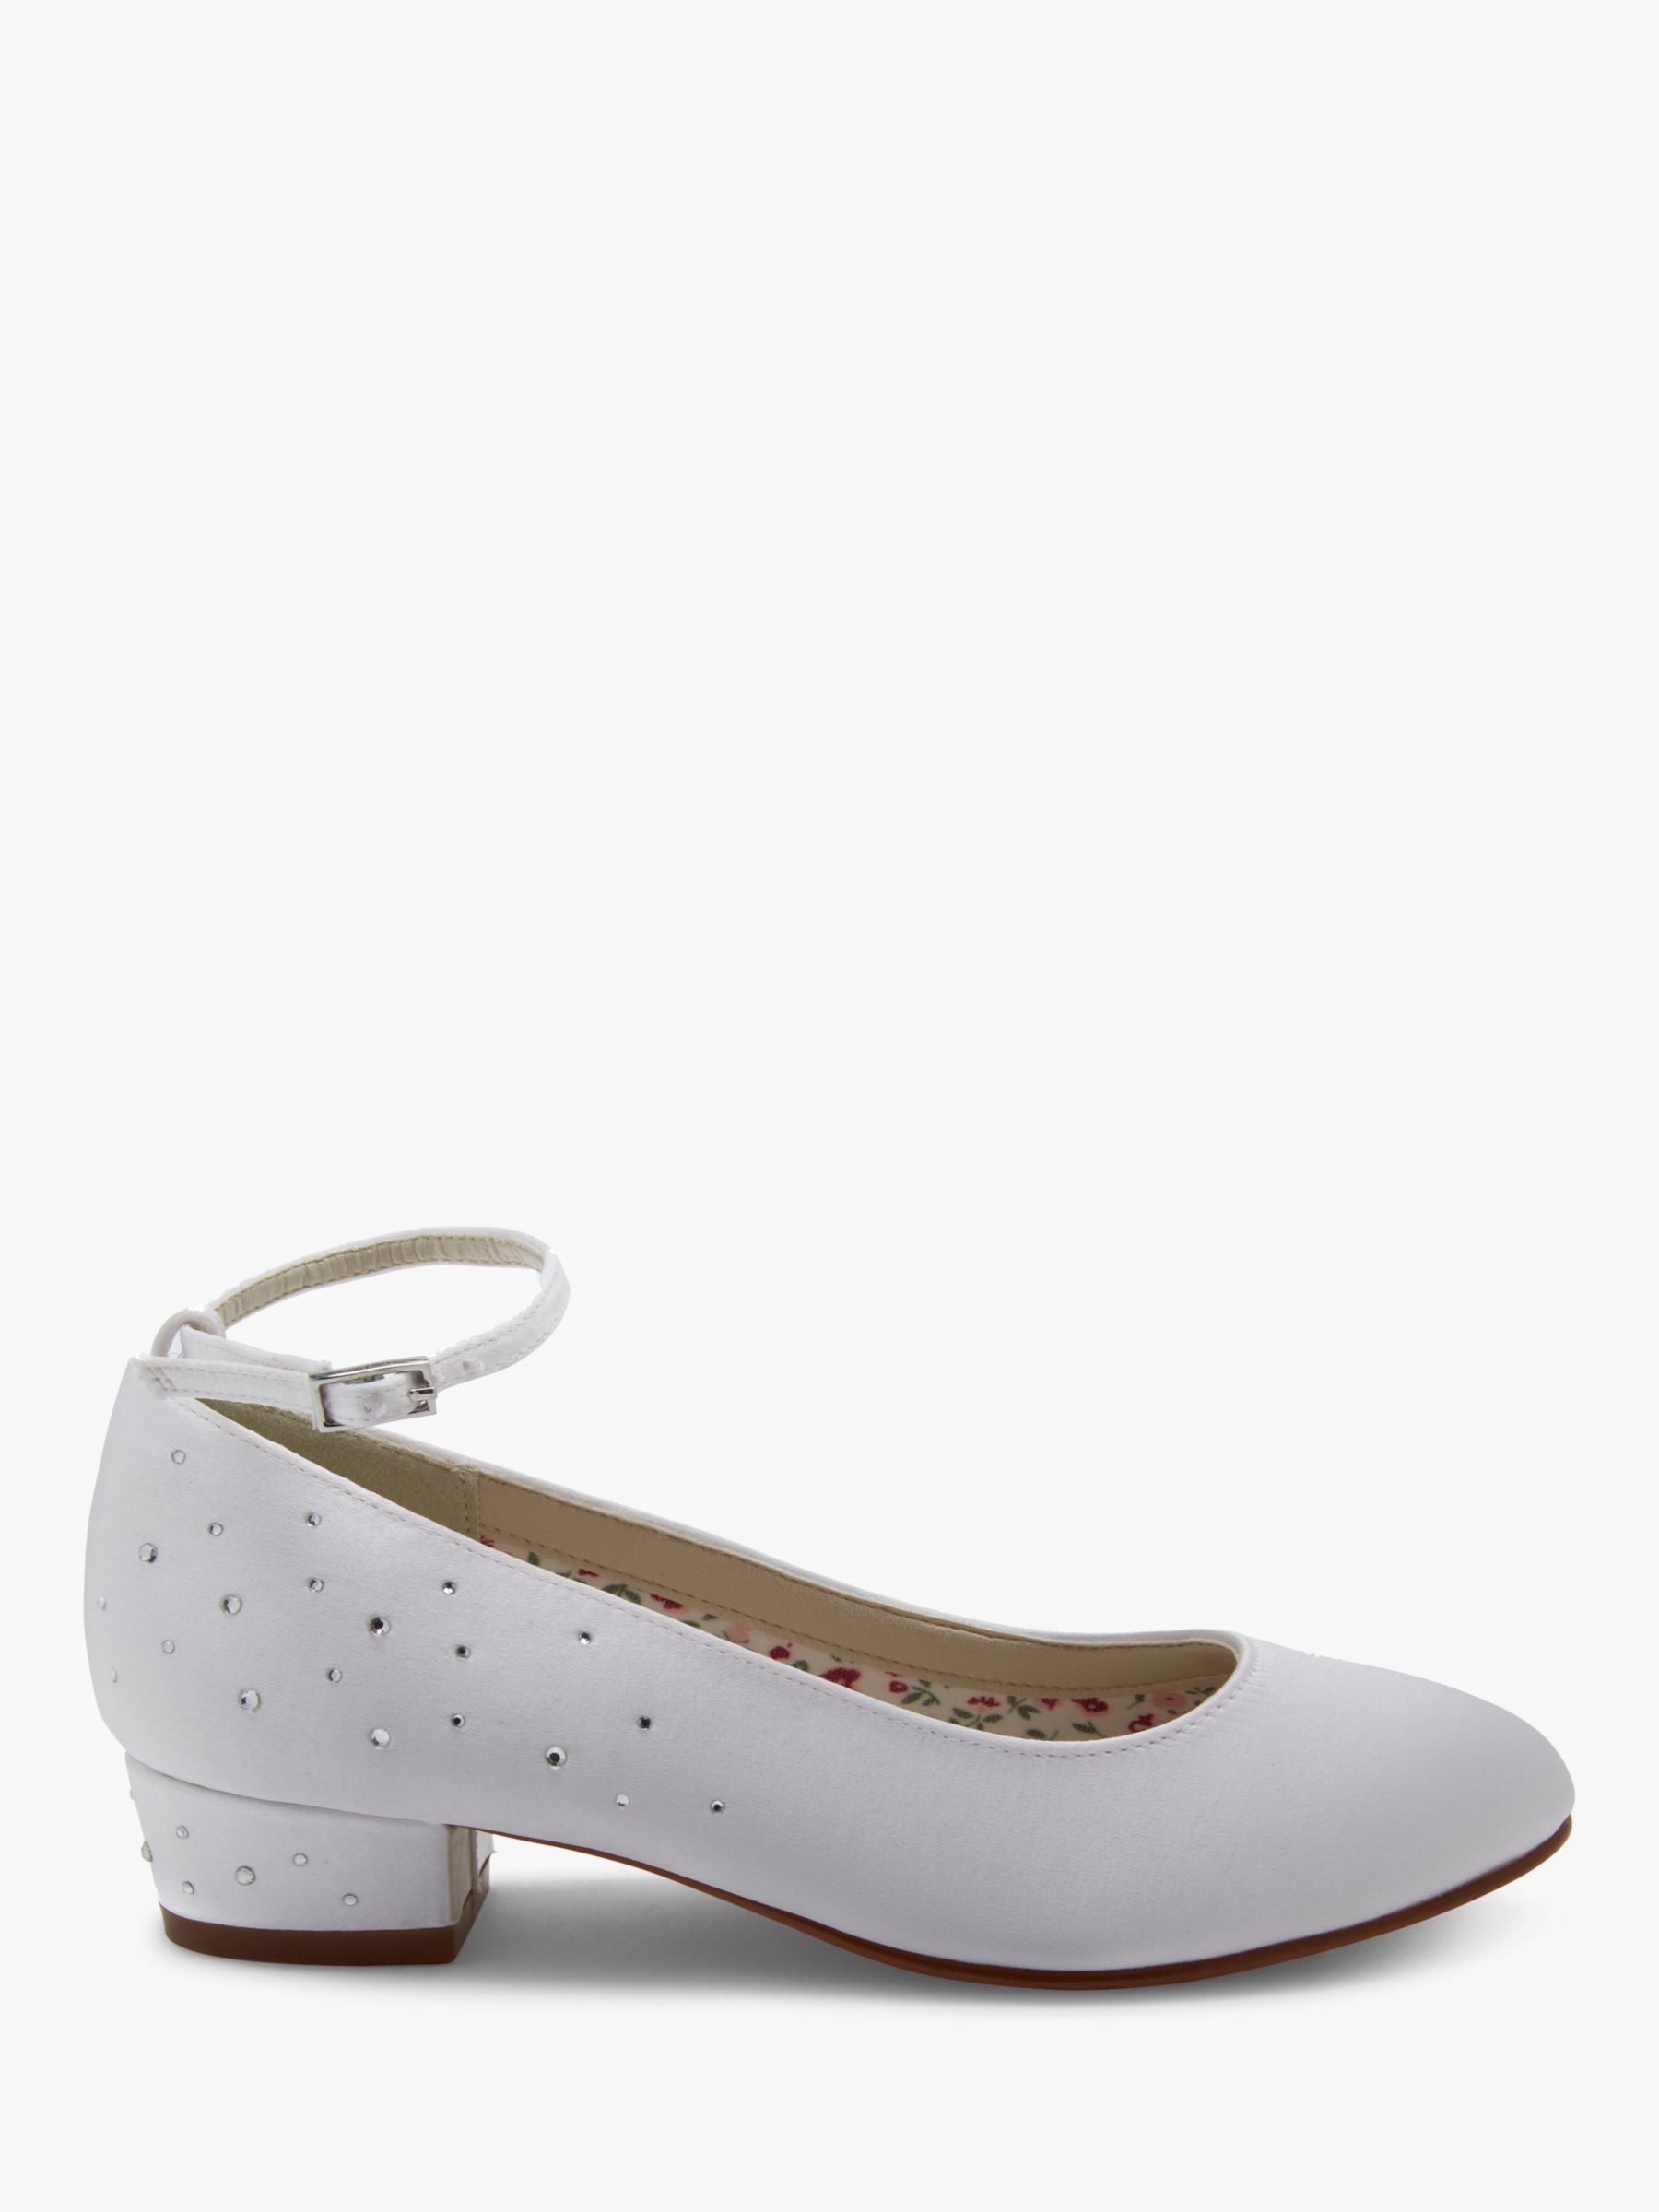 Rainbow Club Maple Bridesmaids' Shoes, White, 12 Jnr